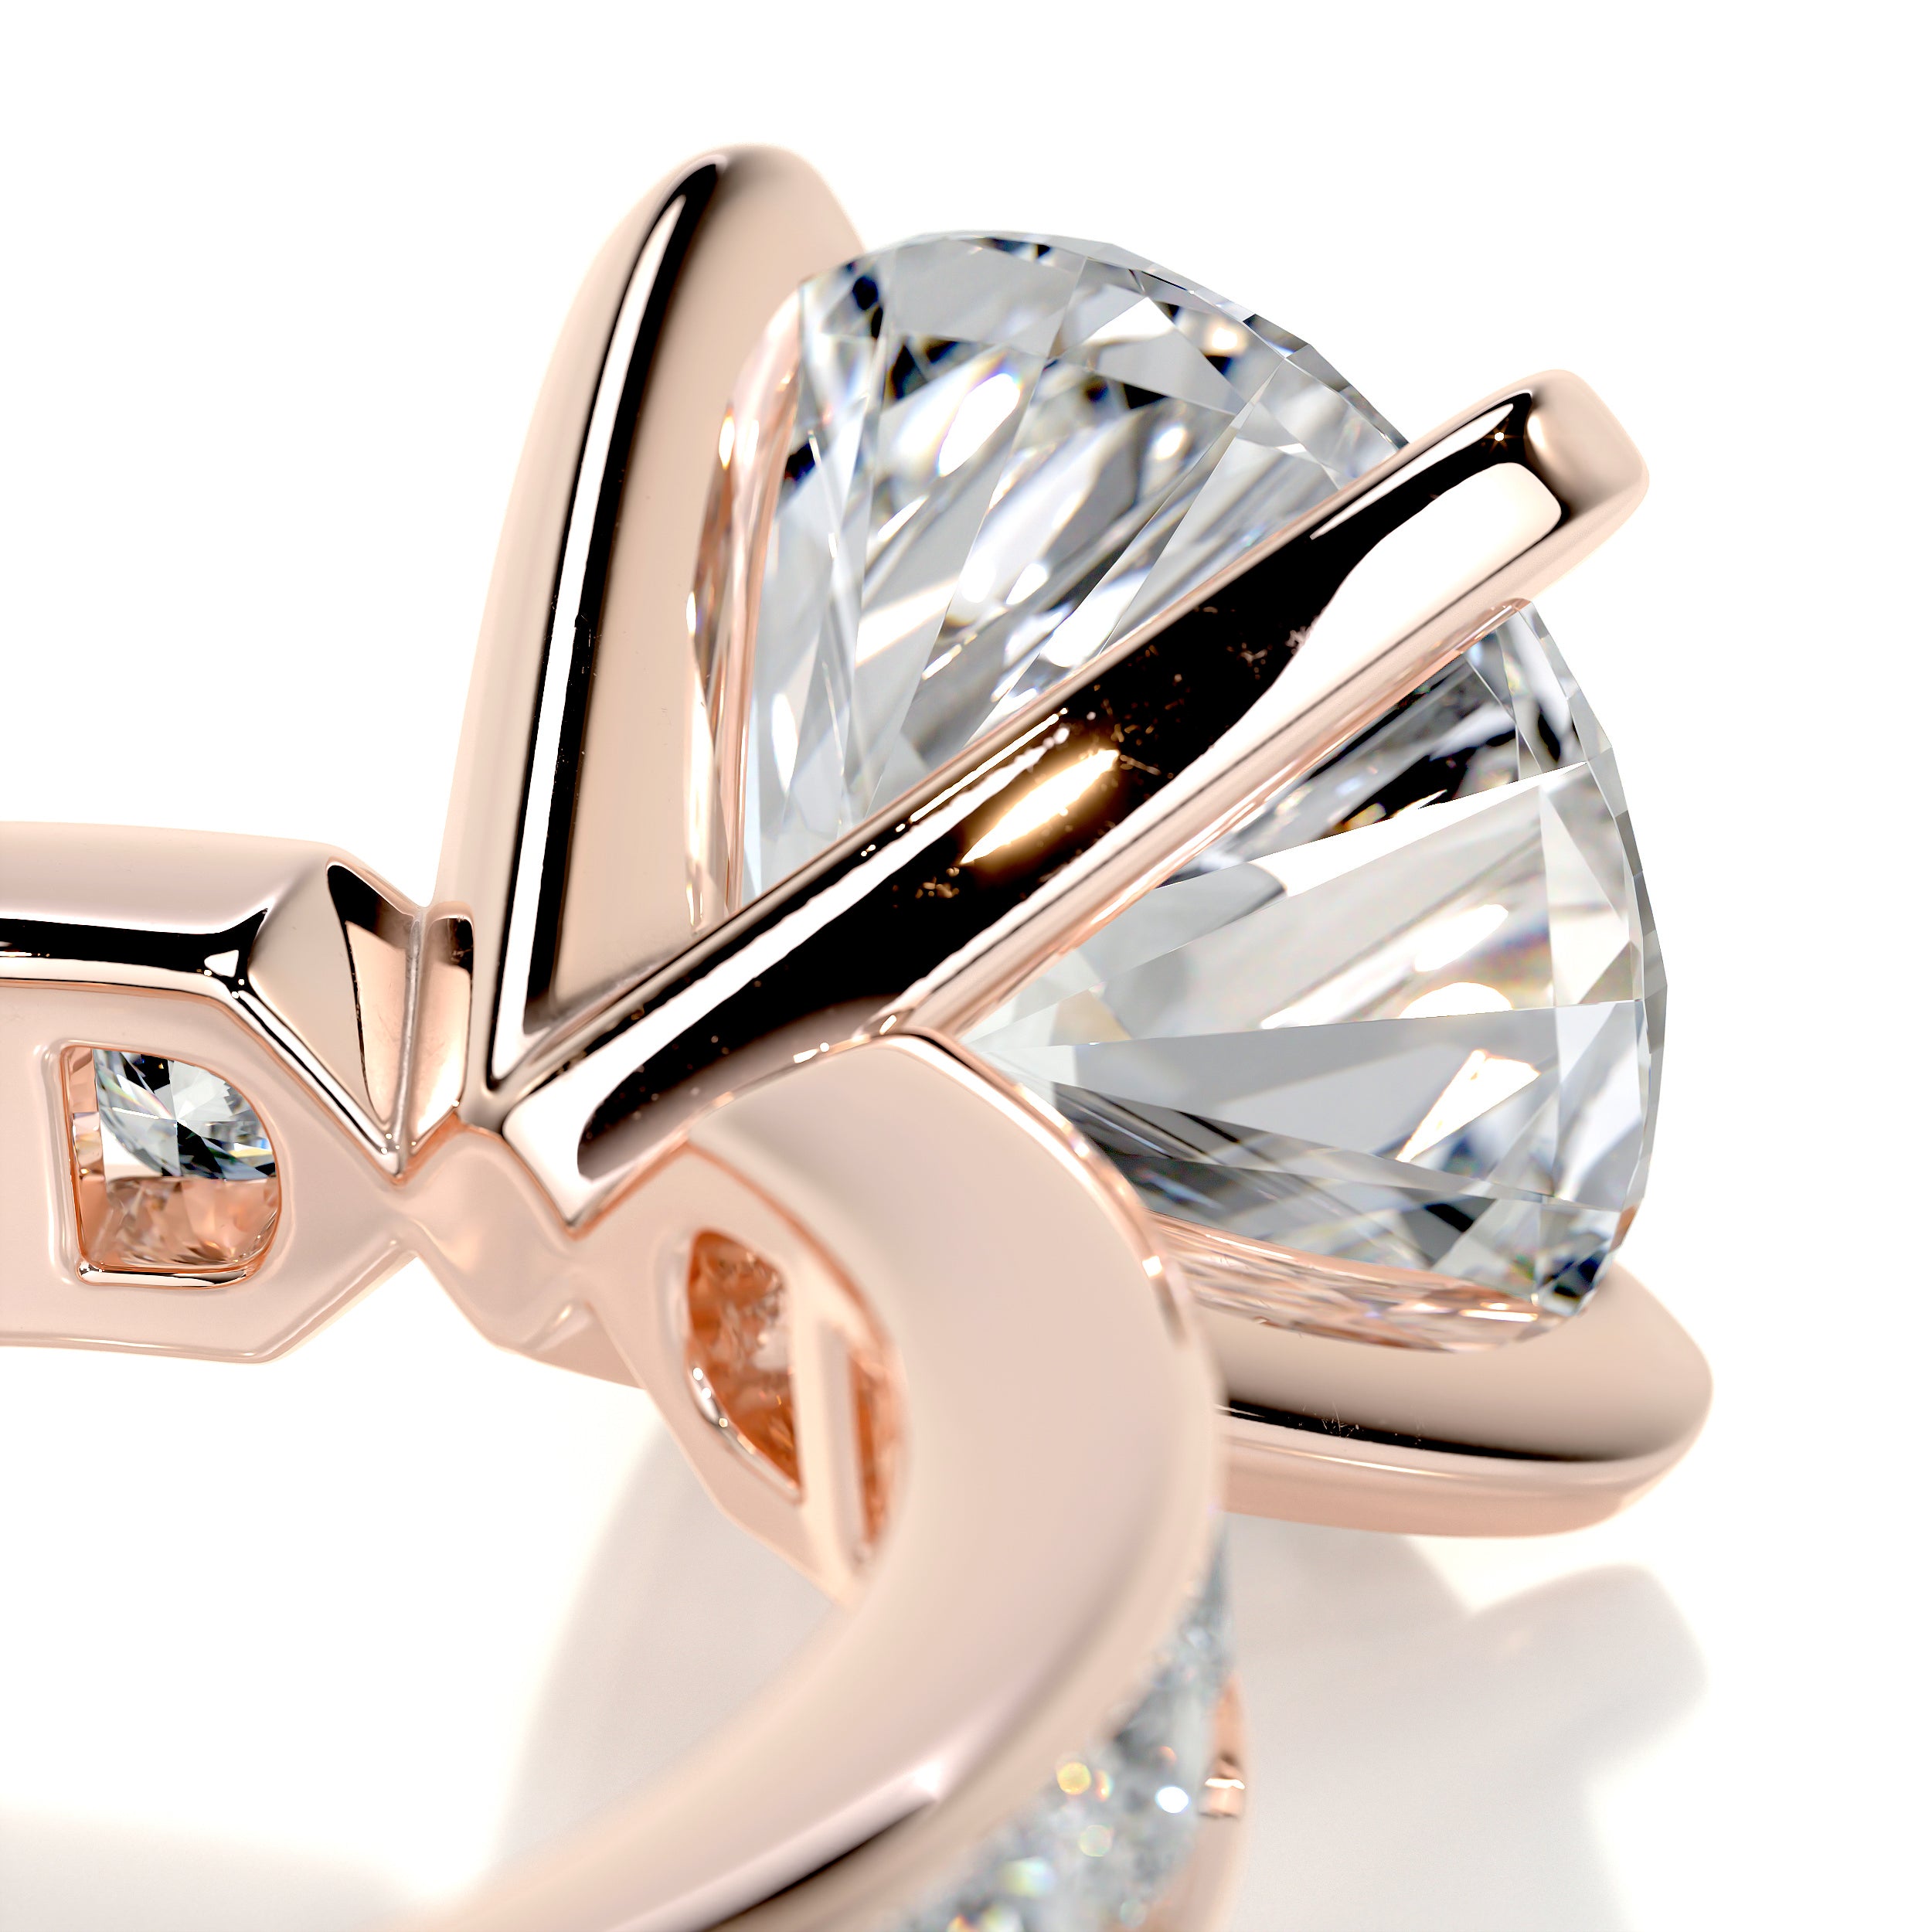 Giselle Diamond Engagement Ring   (3.50 Carat) -14K Rose Gold